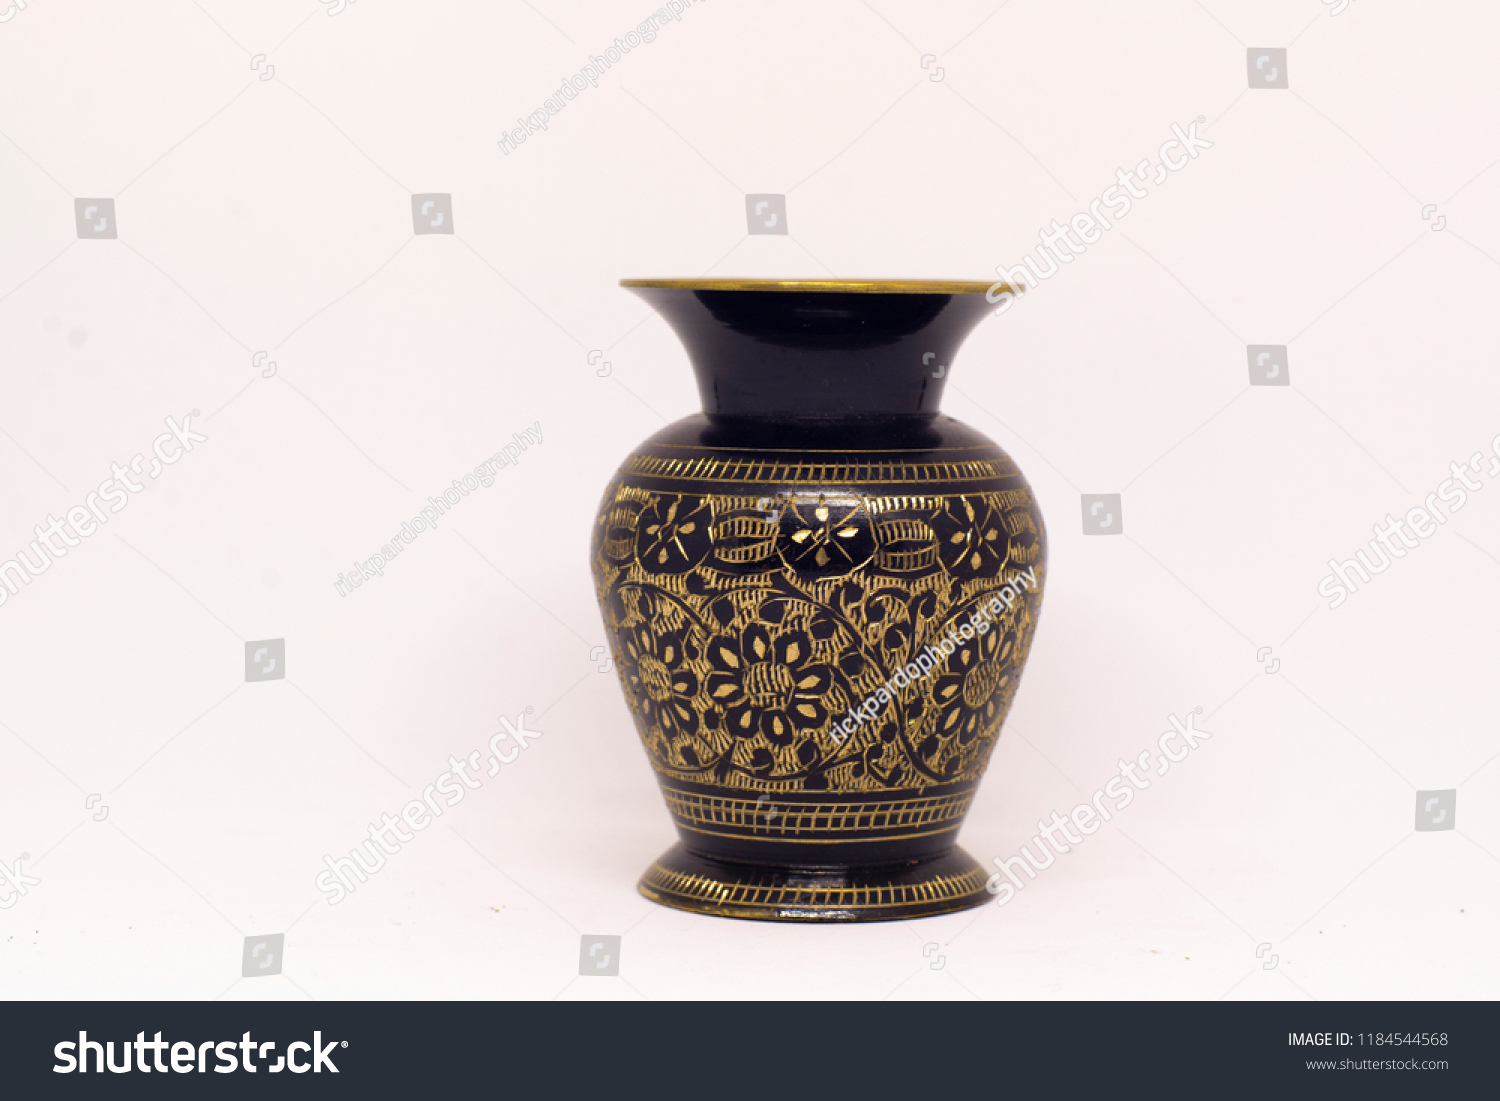 golden vase in a white background  #1184544568